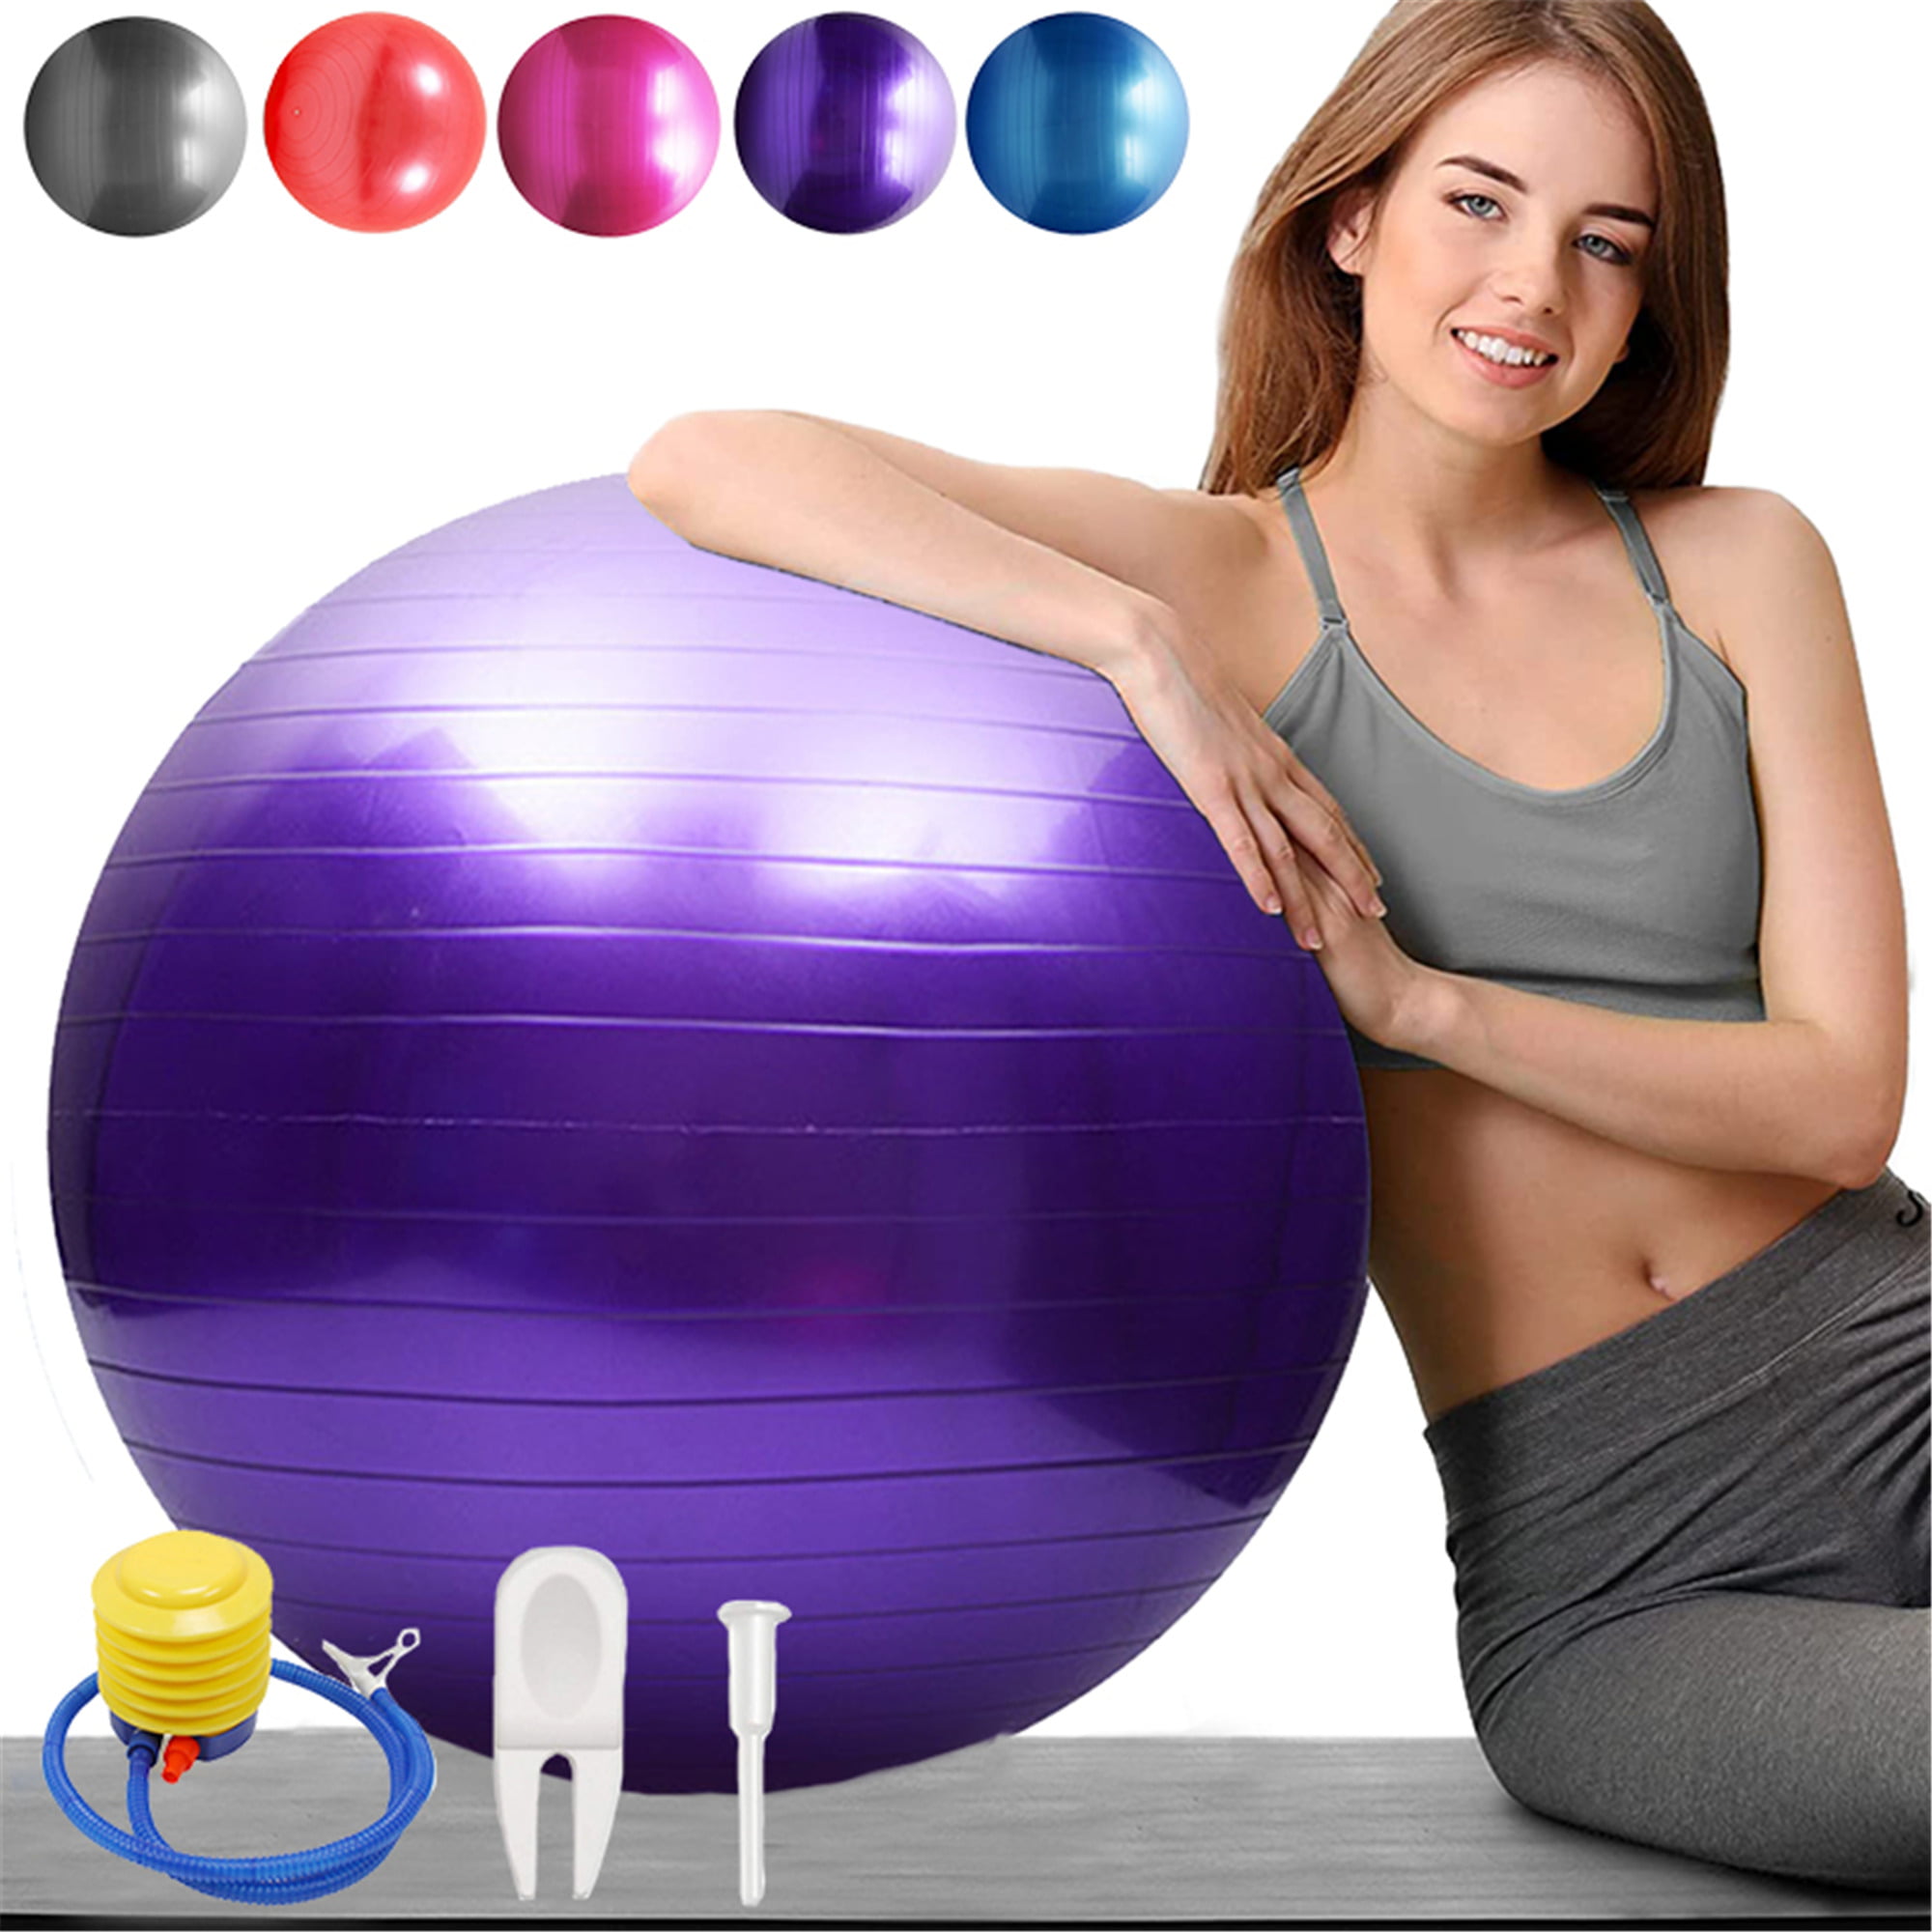 Elbourn Anti-Burst and Slip Resistant Exercise Ball Yoga Ball